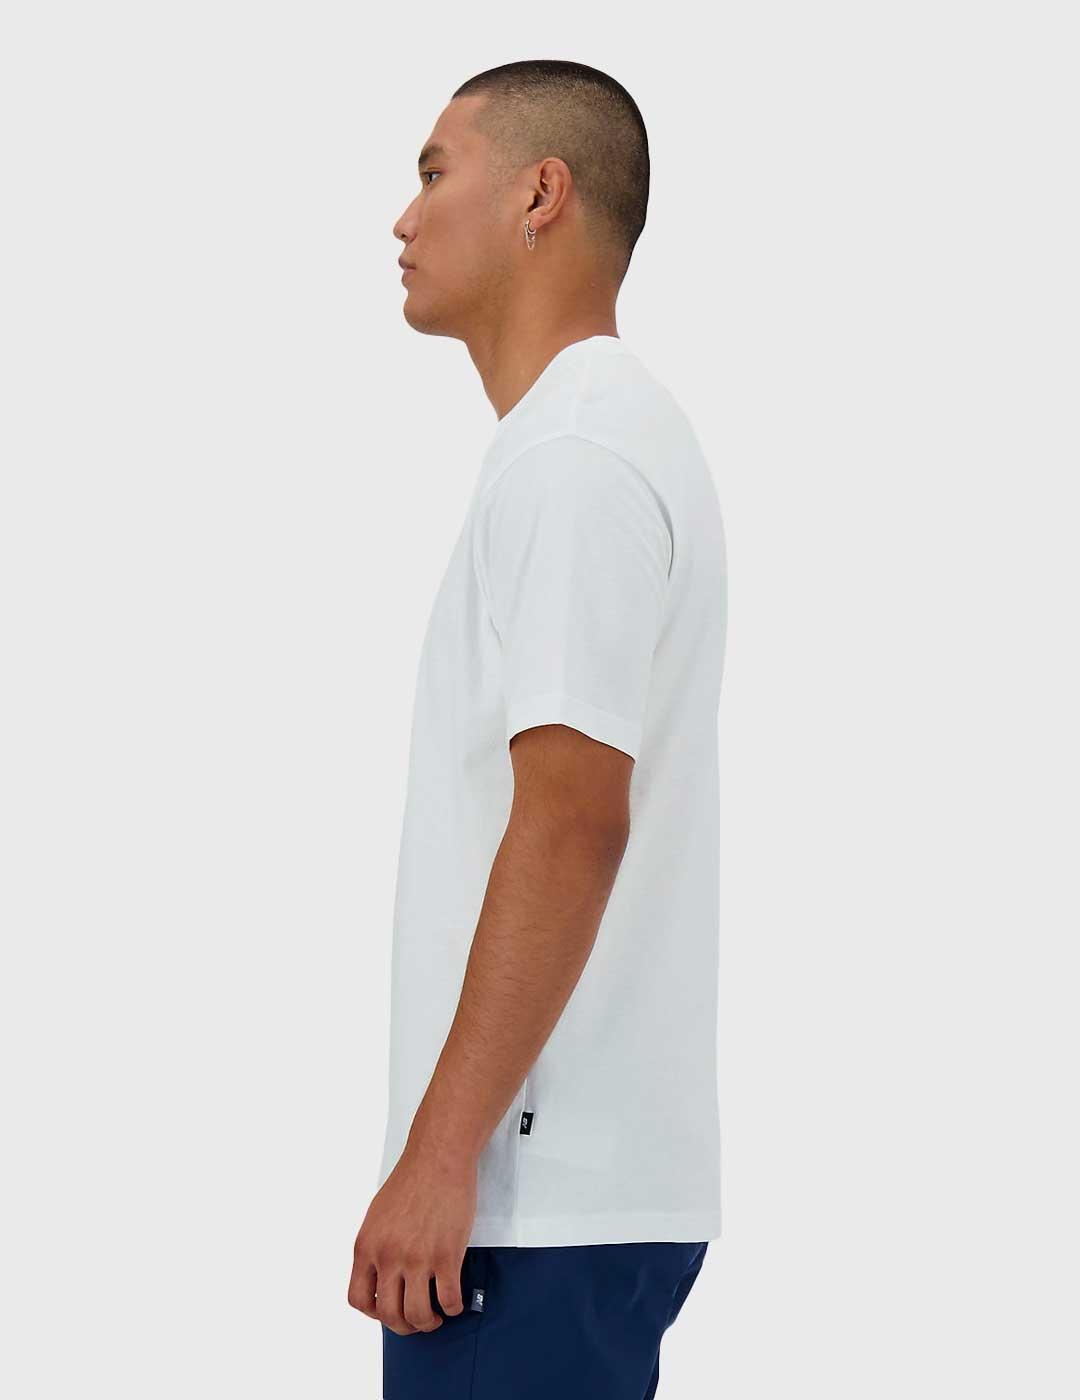 Camiseta New Balance Athletics Never Age blanca para hombre